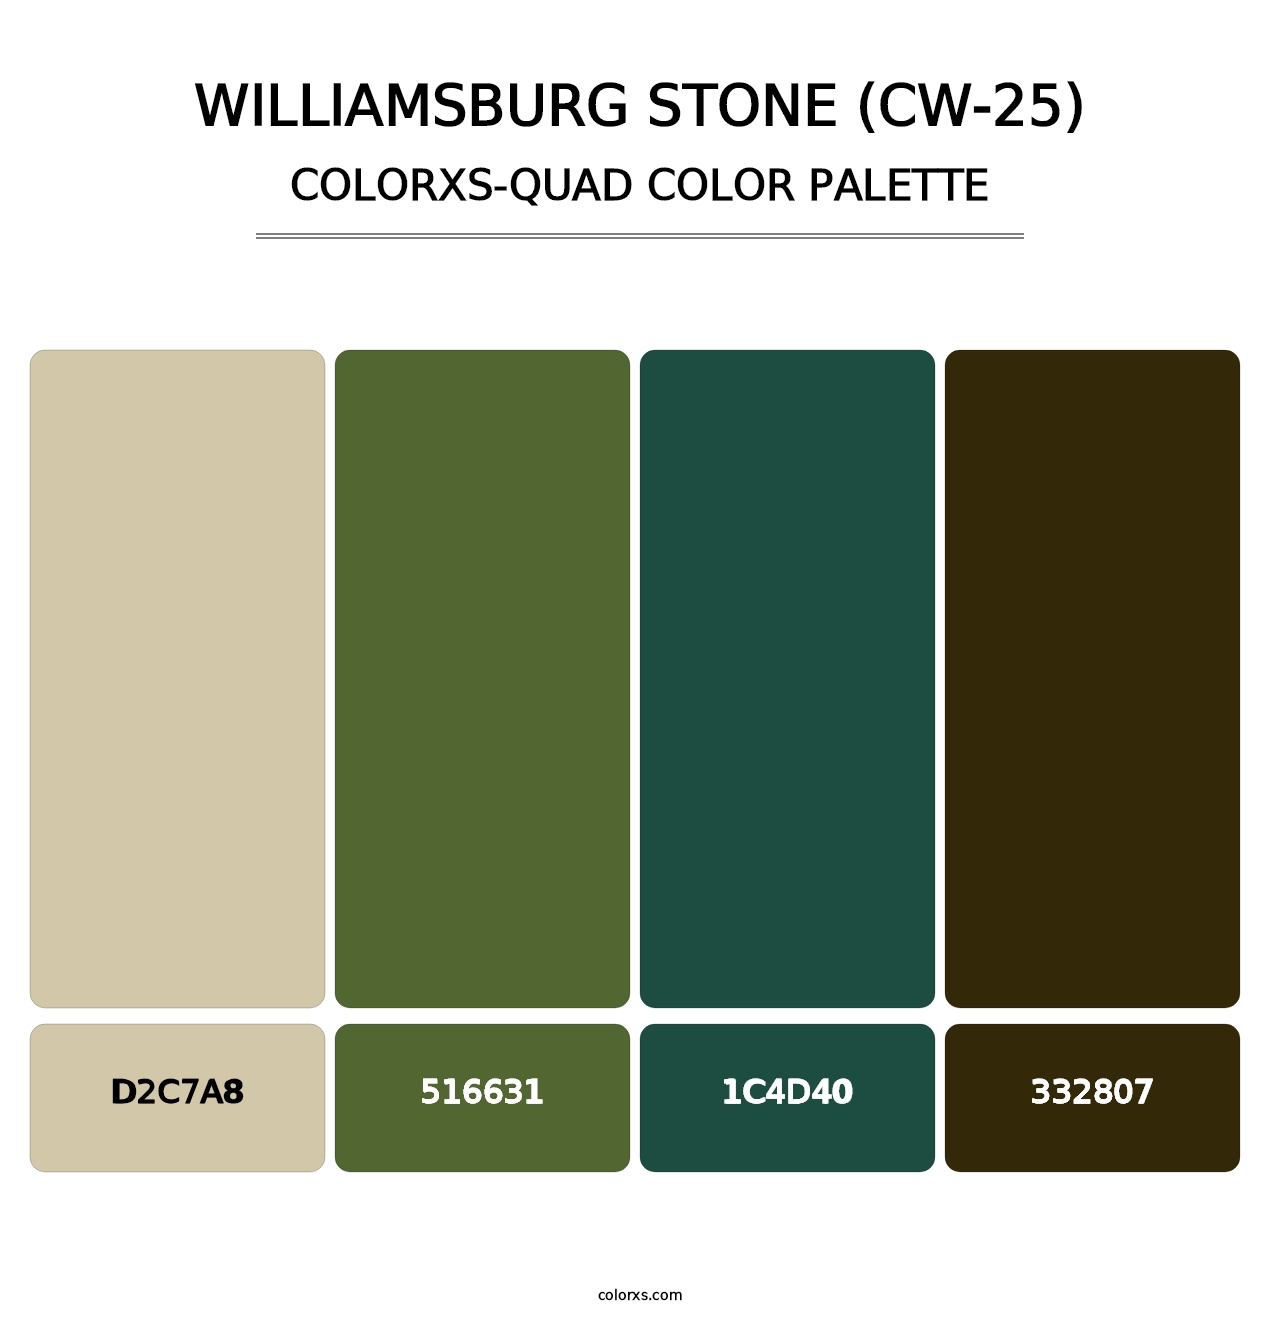 Williamsburg Stone (CW-25) - Colorxs Quad Palette